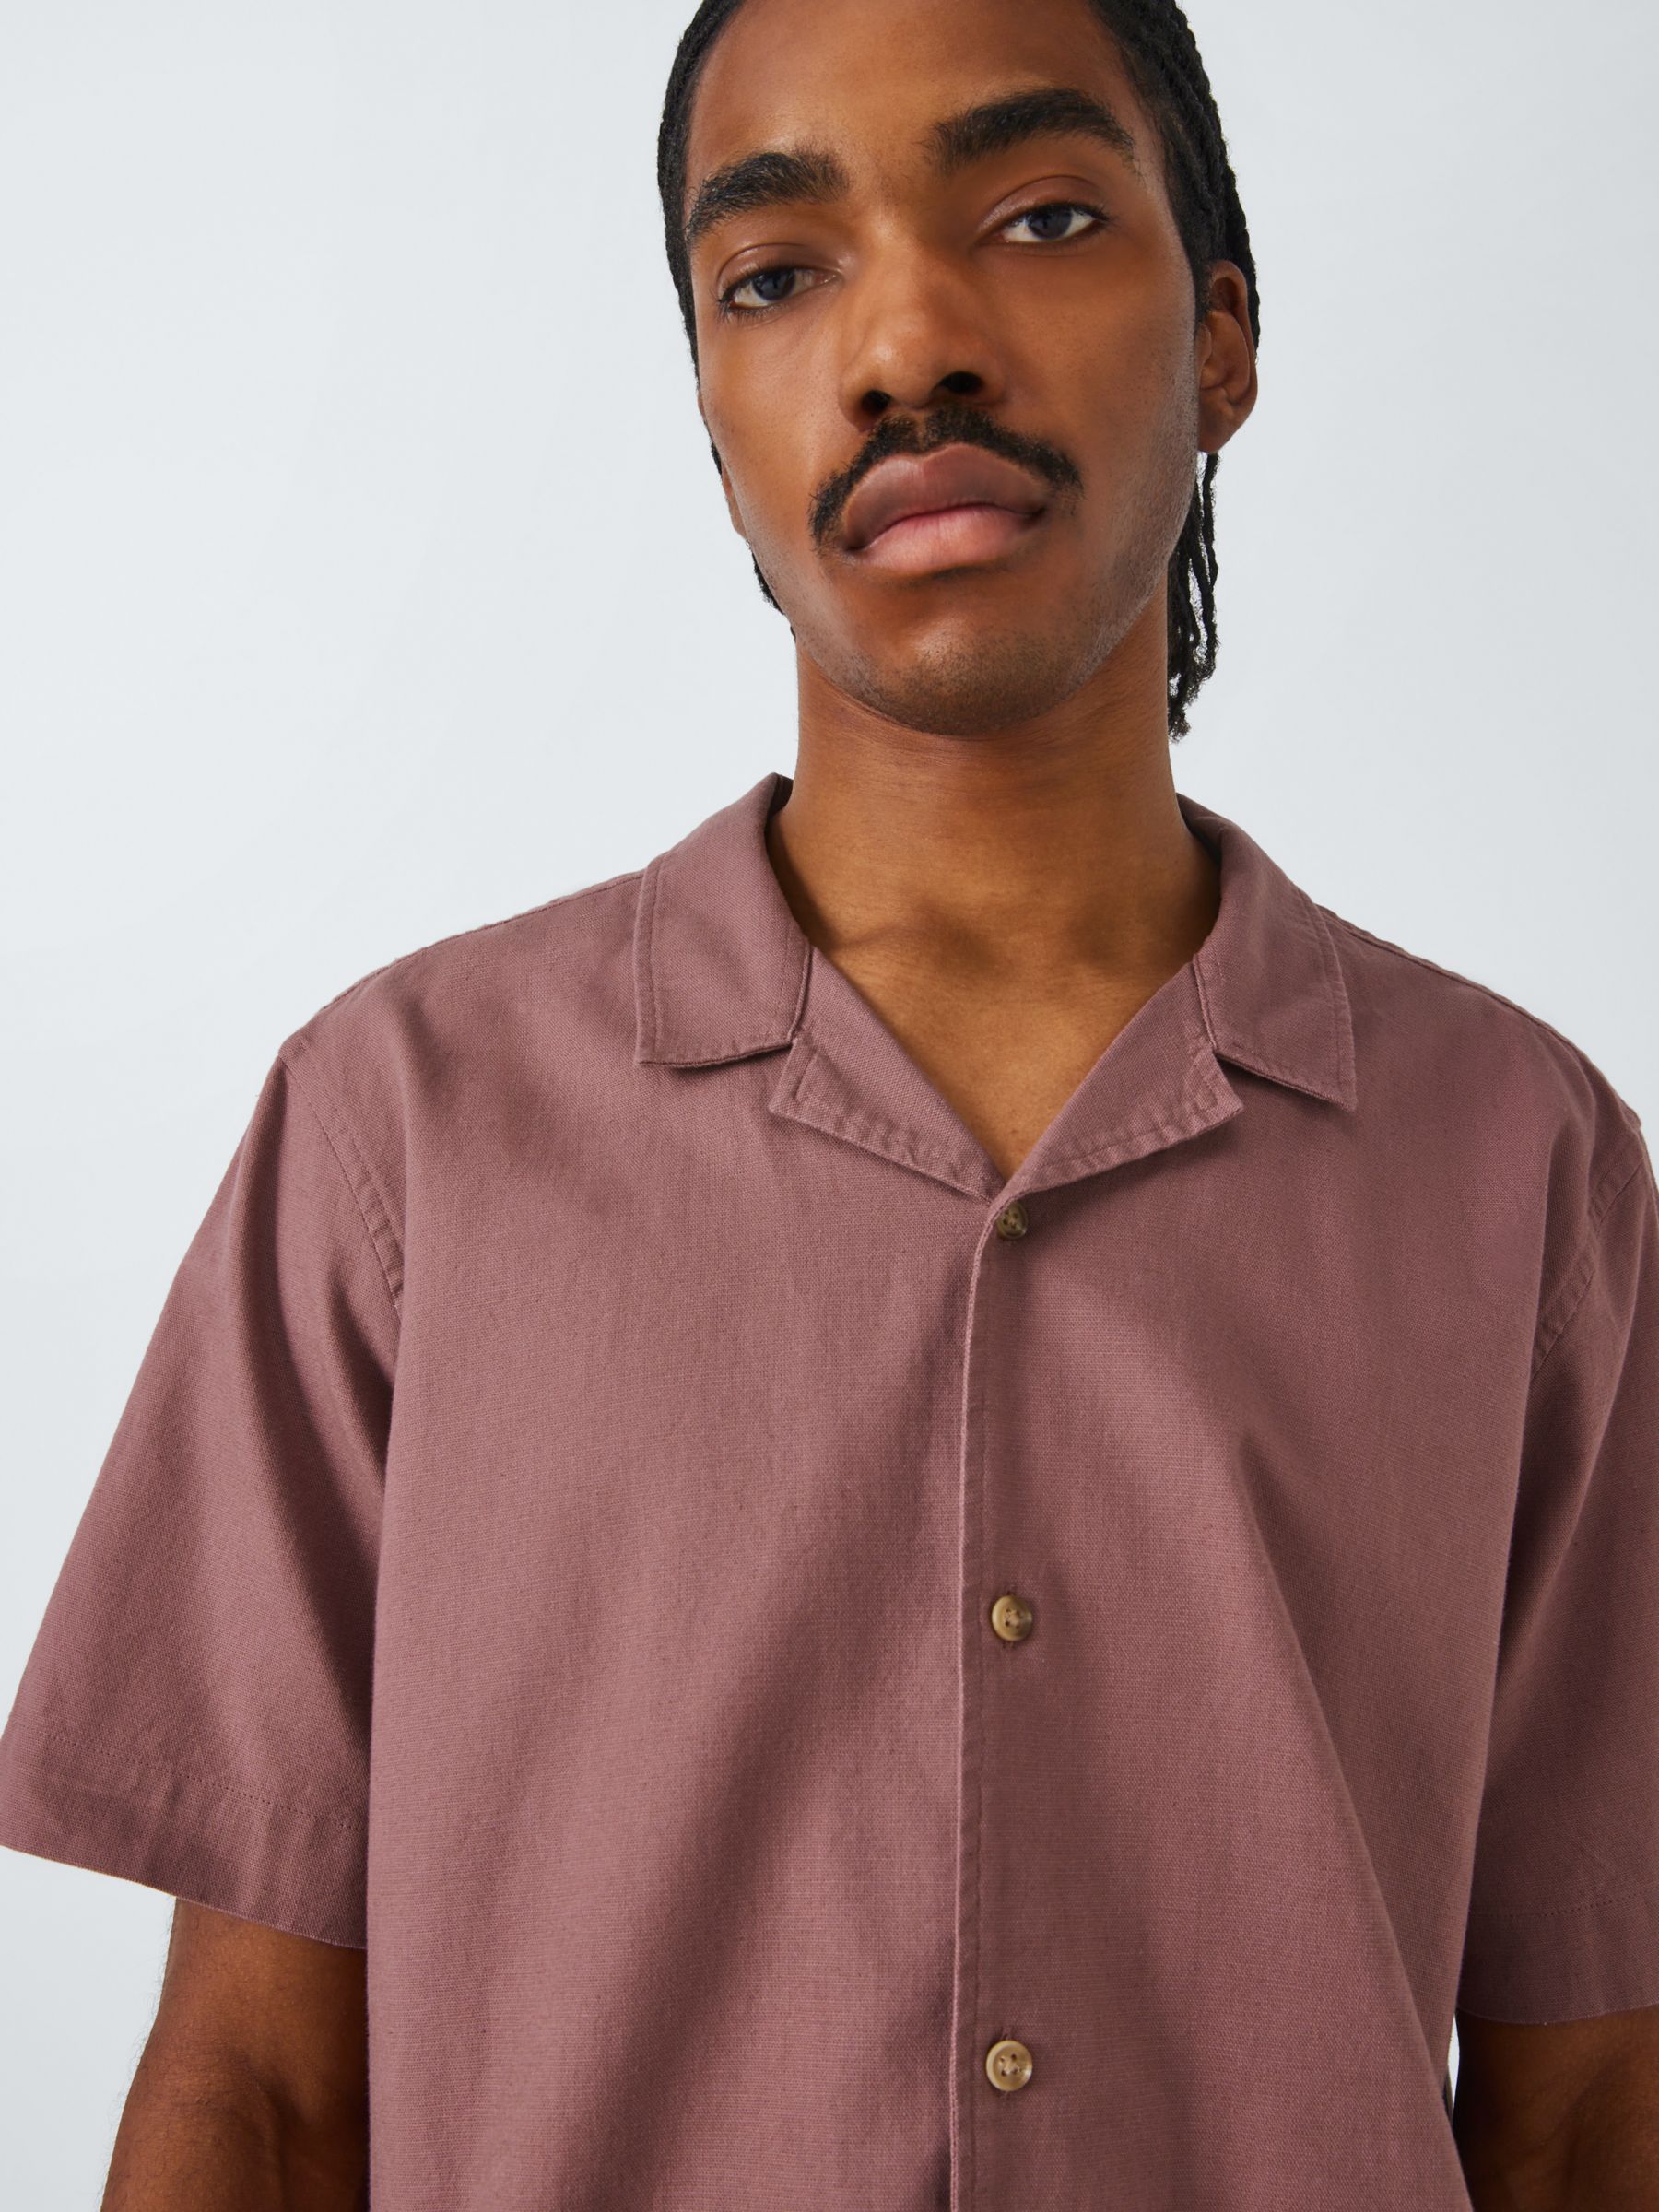 John Lewis ANYDAY Cotton & Linen Cuban Collar Shirt, Rose Brown, S